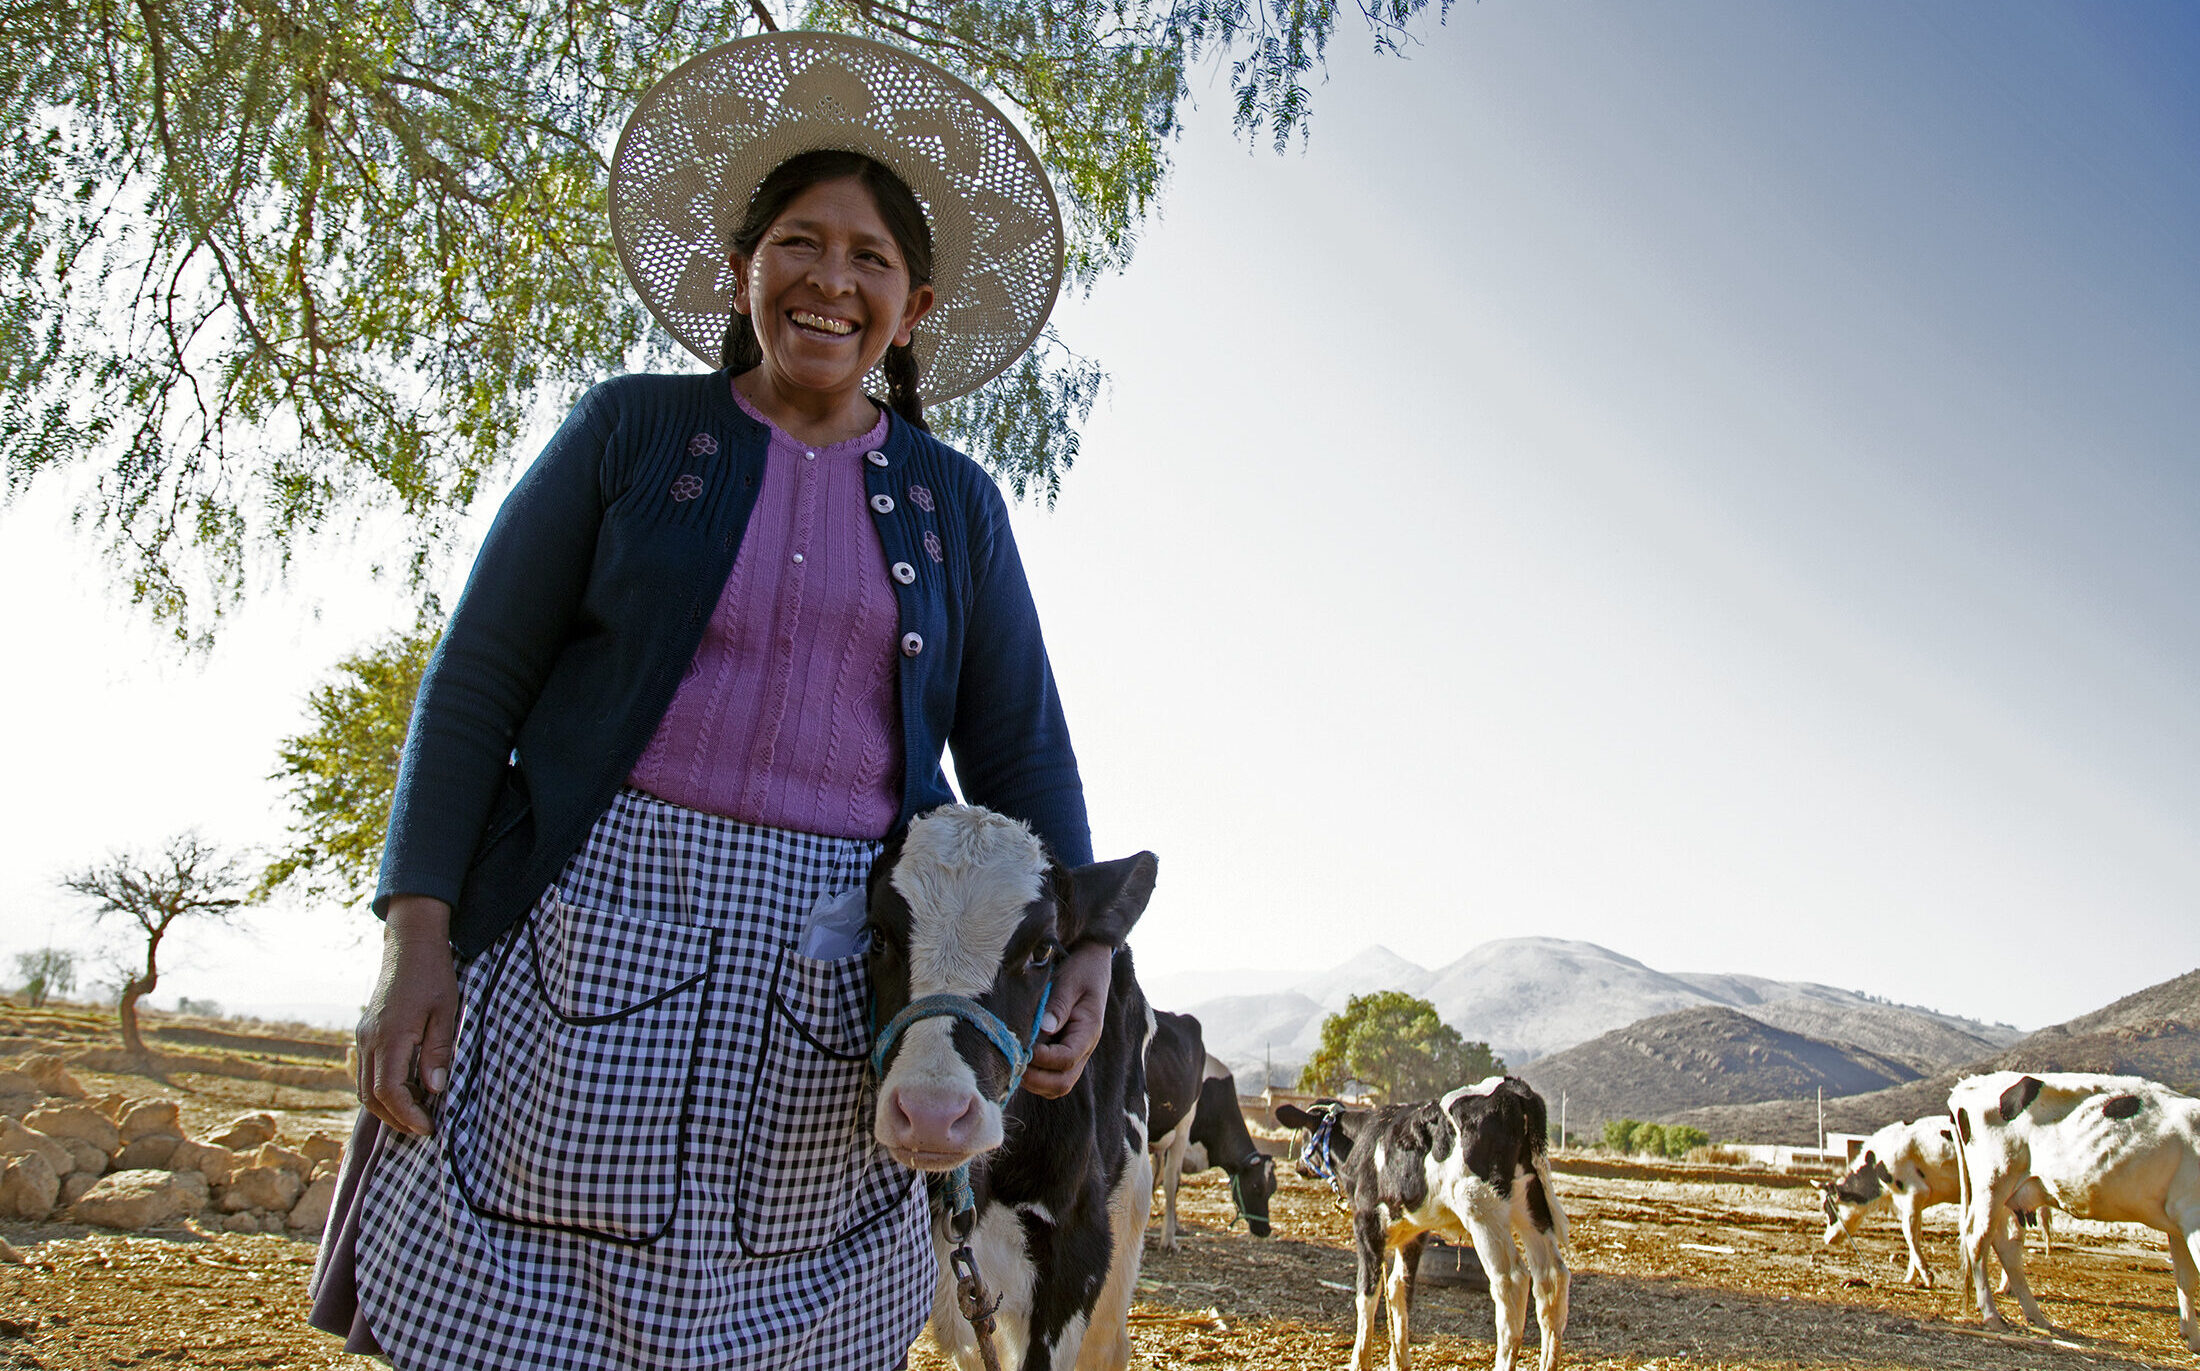 Sulema on her farm in Cochabamba, Bolivia